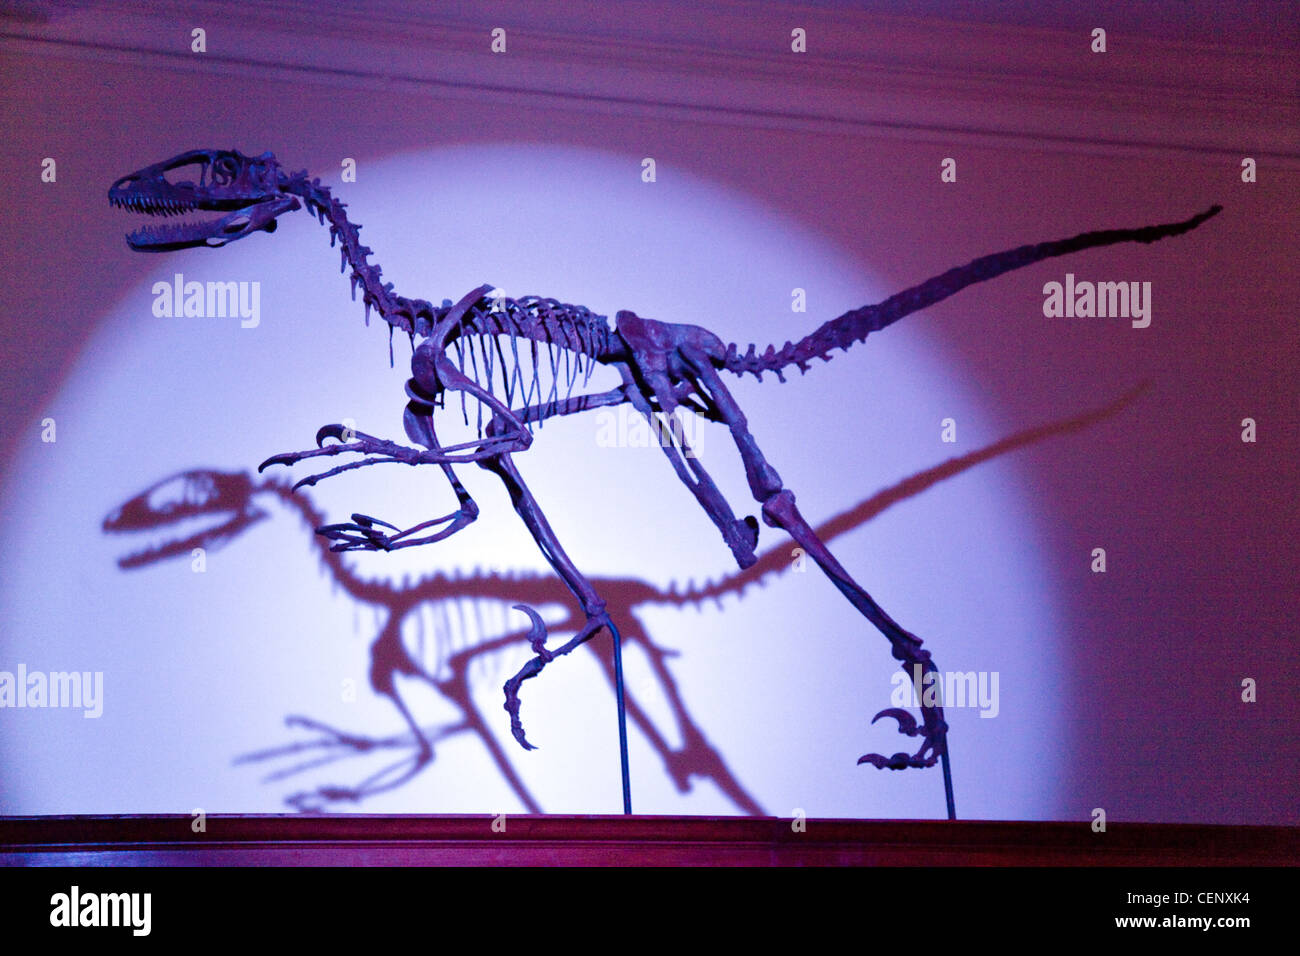 Skeleton of a  small dinosaur lit in purple light, Sedgwick earth Sciences Museum, Cambridge UK Stock Photo